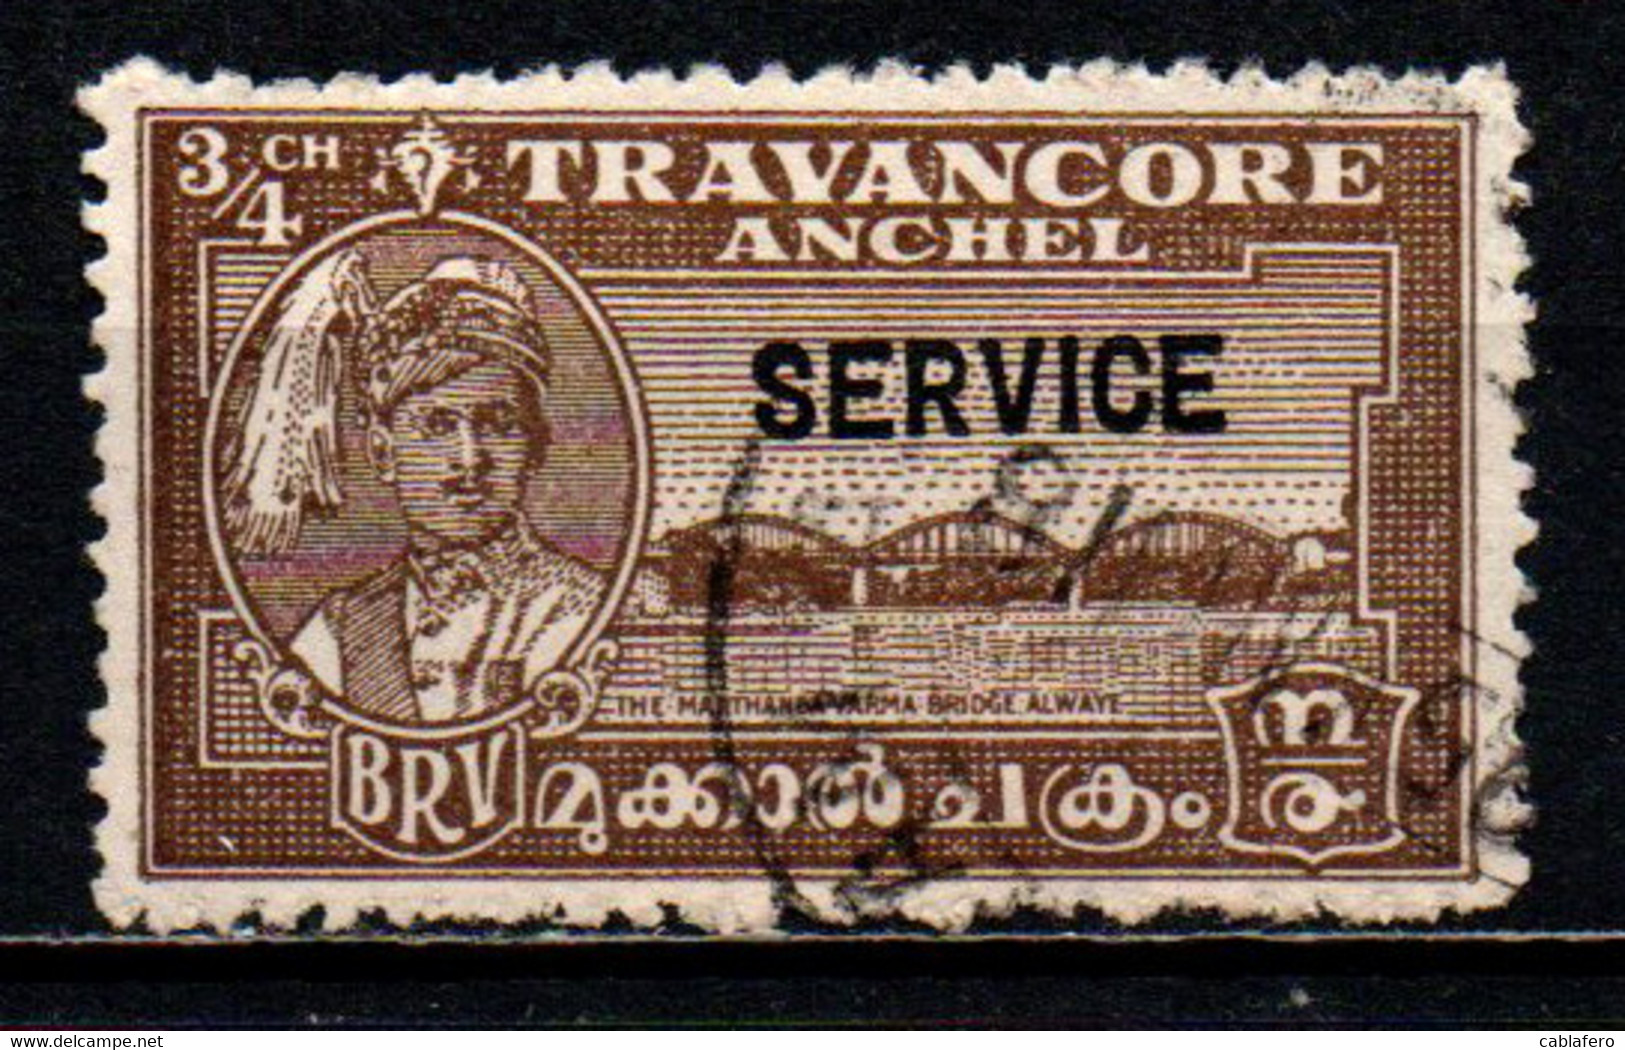 TRAVANCORE - 1941 - Maharaja And Marthanda Varma Bridge, Alwaye - Overprinted - USATO - Travancore